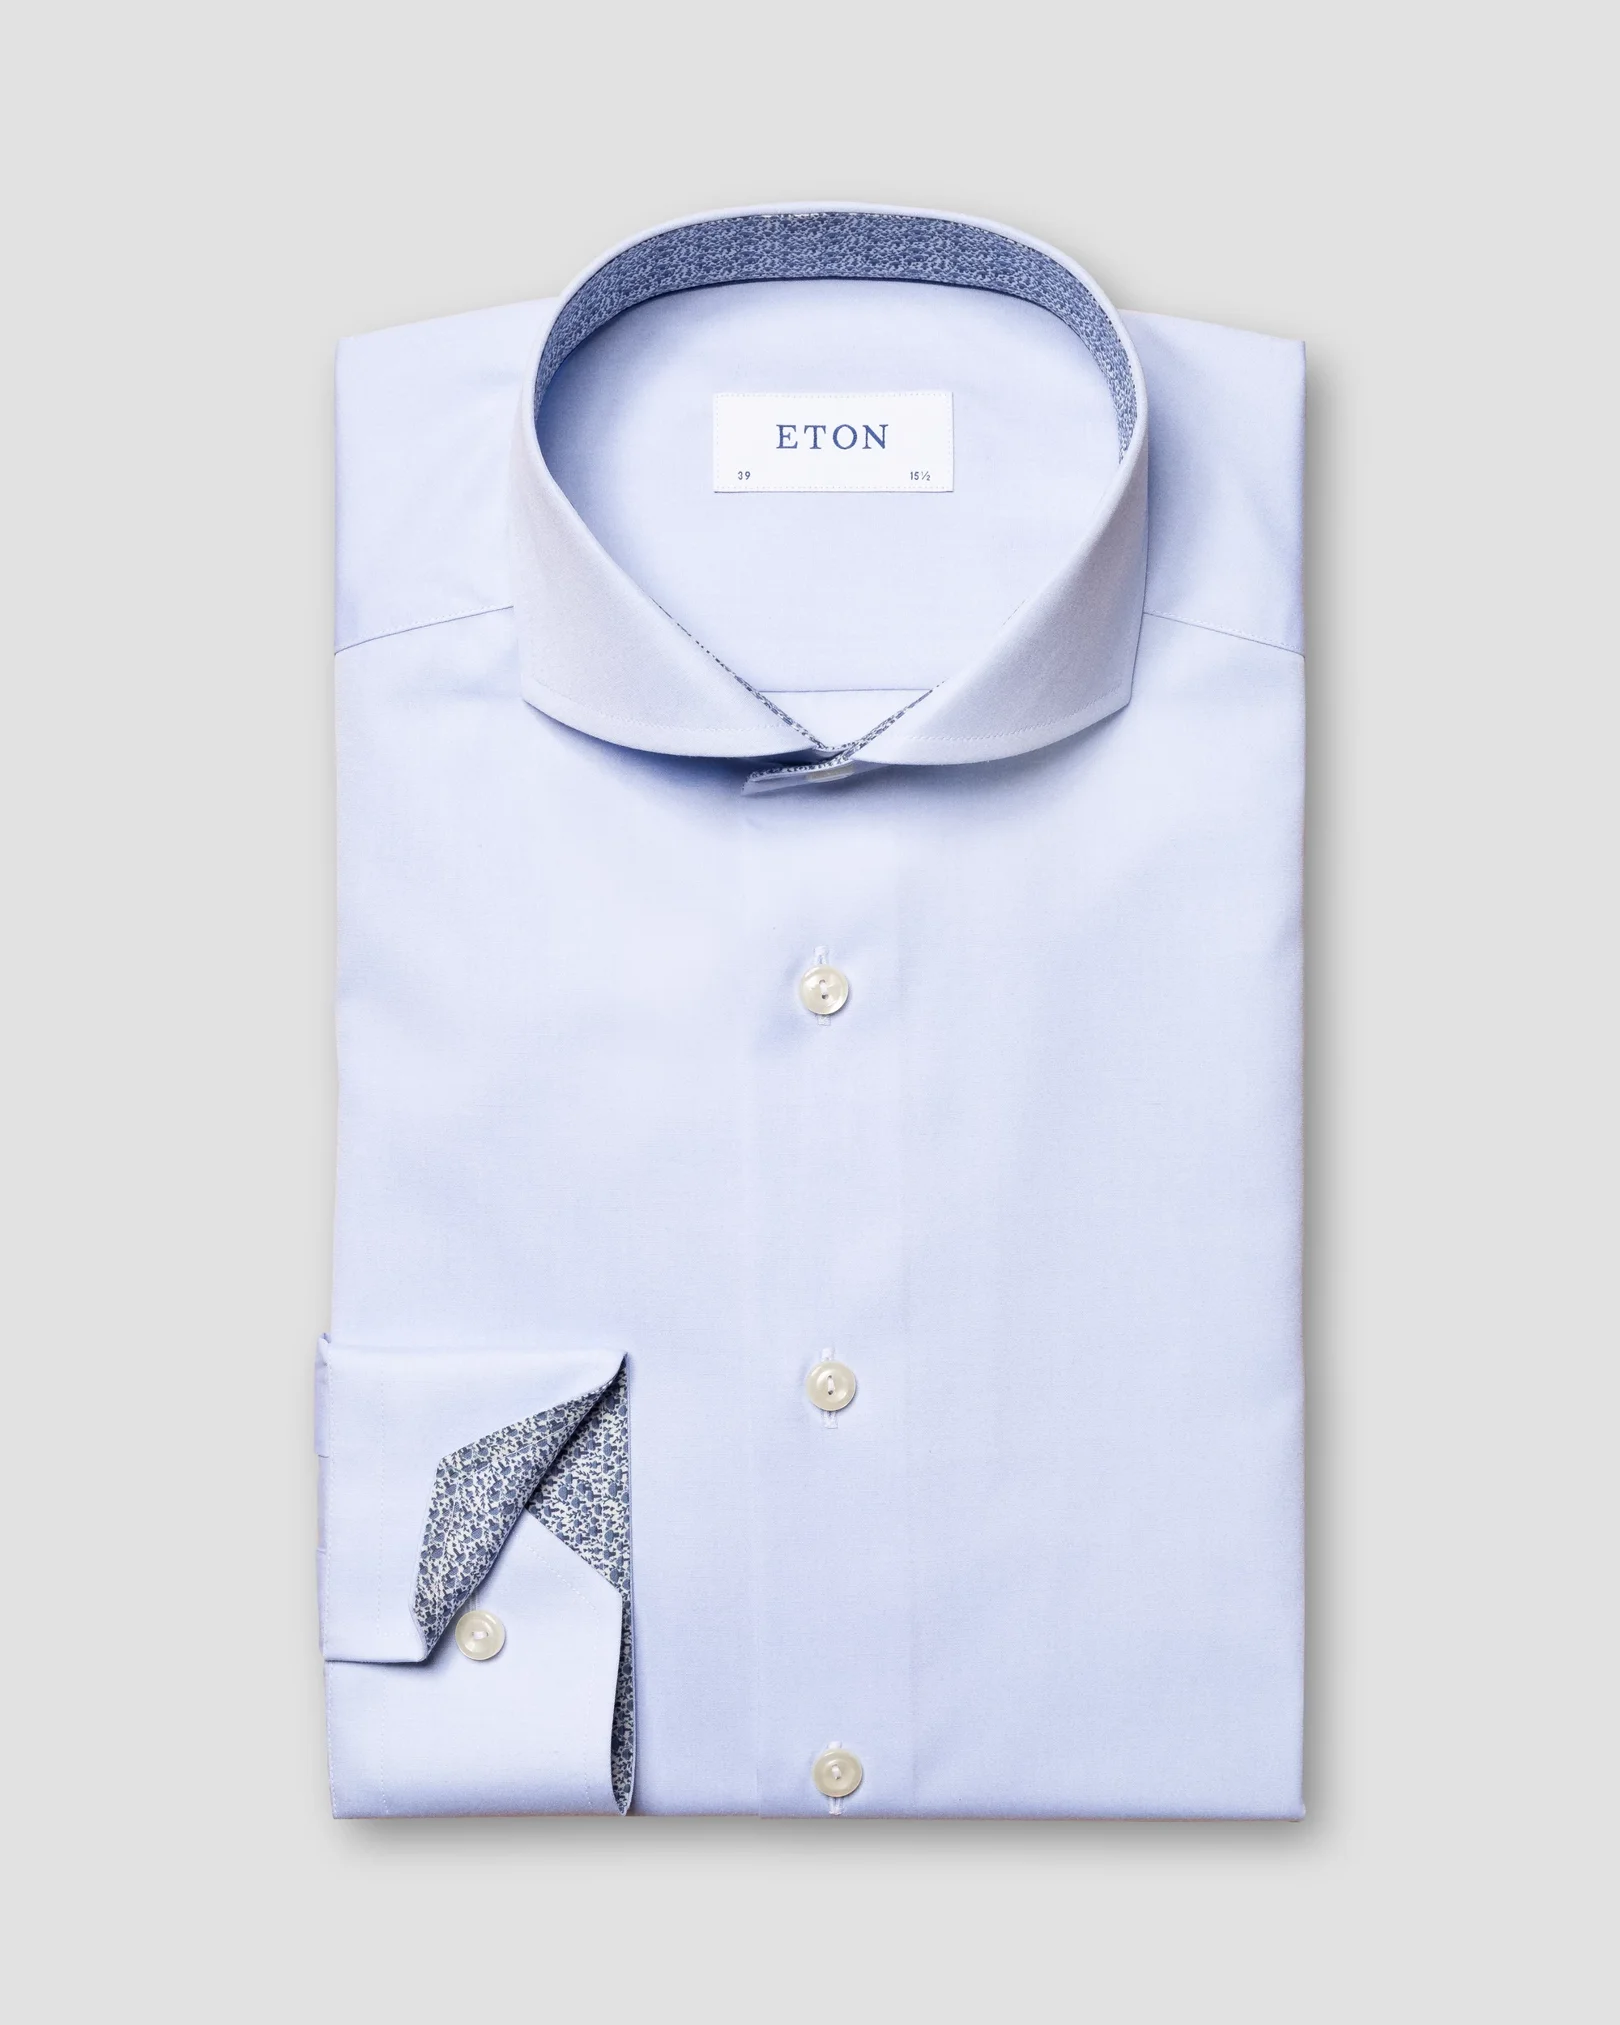 Eton - light blue poplin shirt mushroom print details